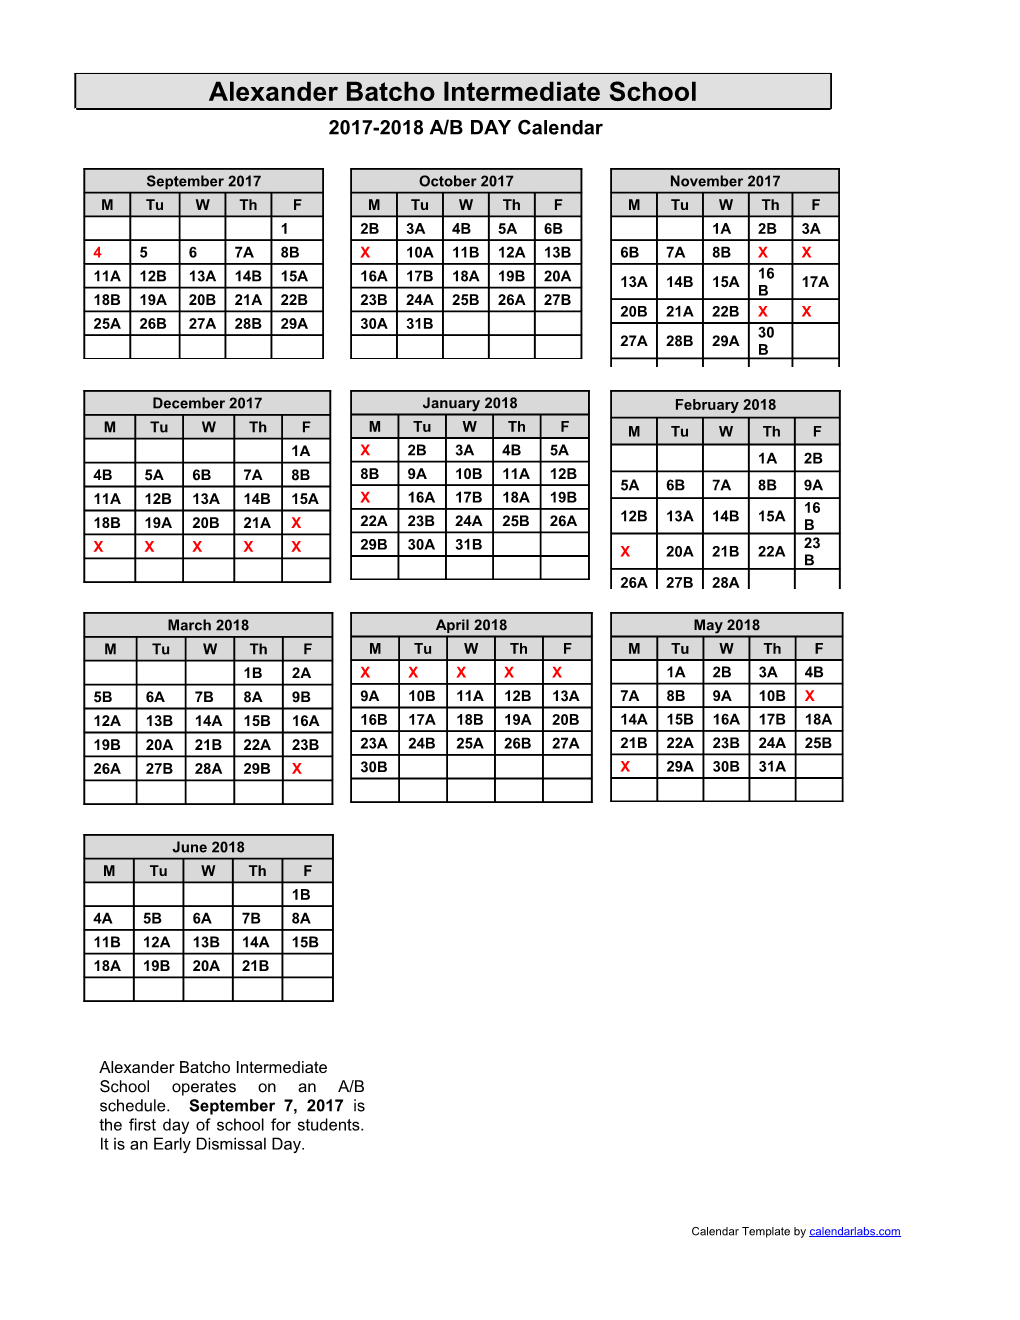 Calendar Template by Calendarlabs.Com